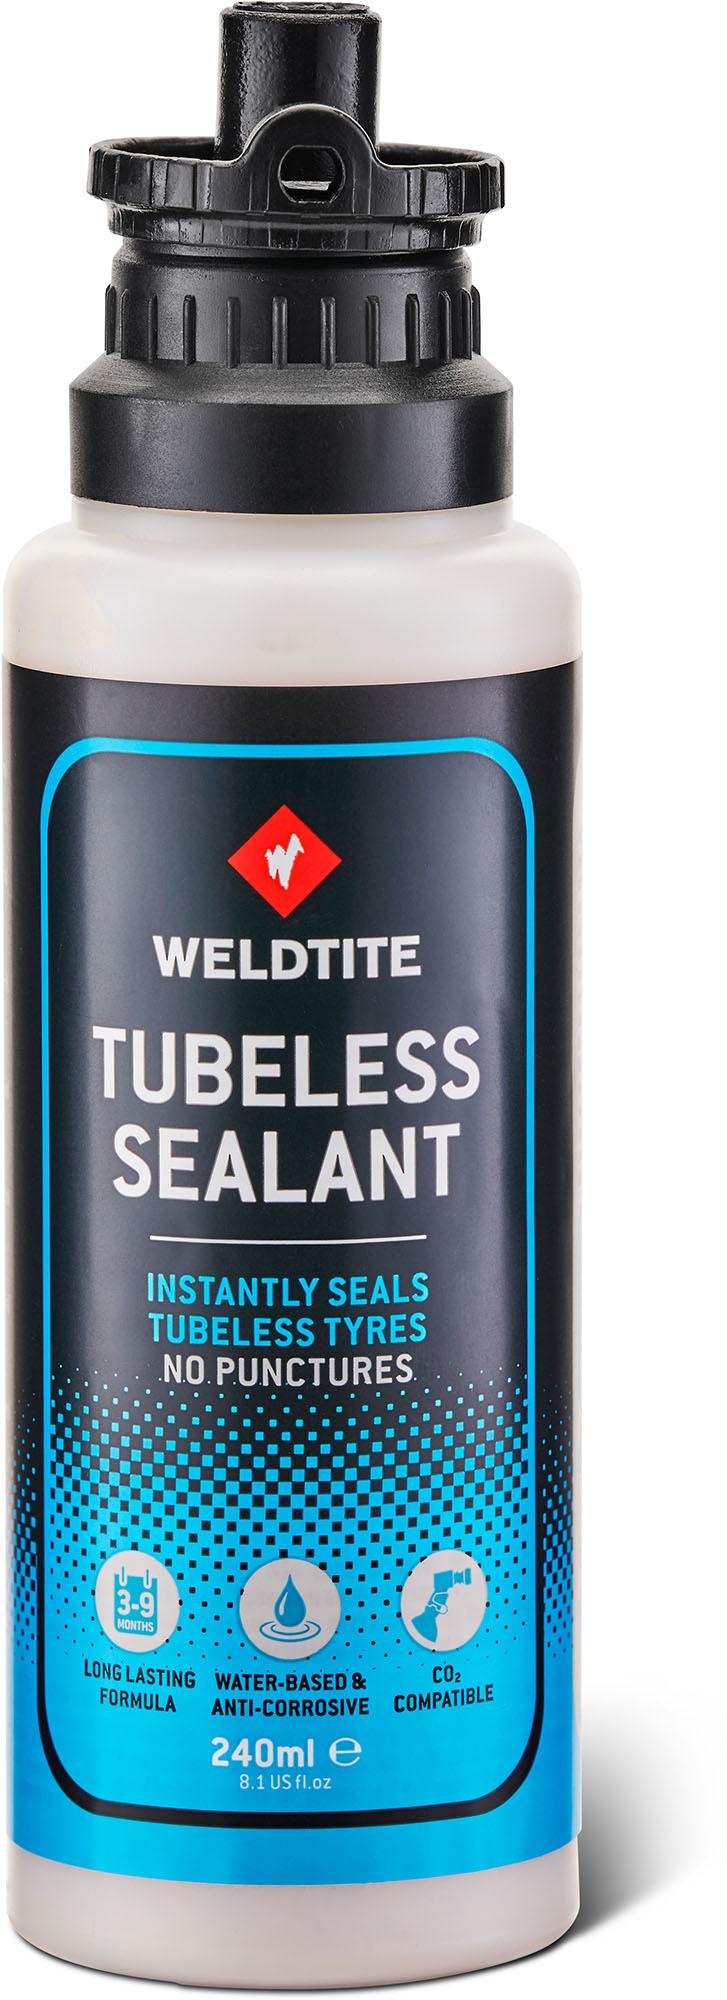 Weldtite Tubeless Tyre Sealant (240ml) - Black